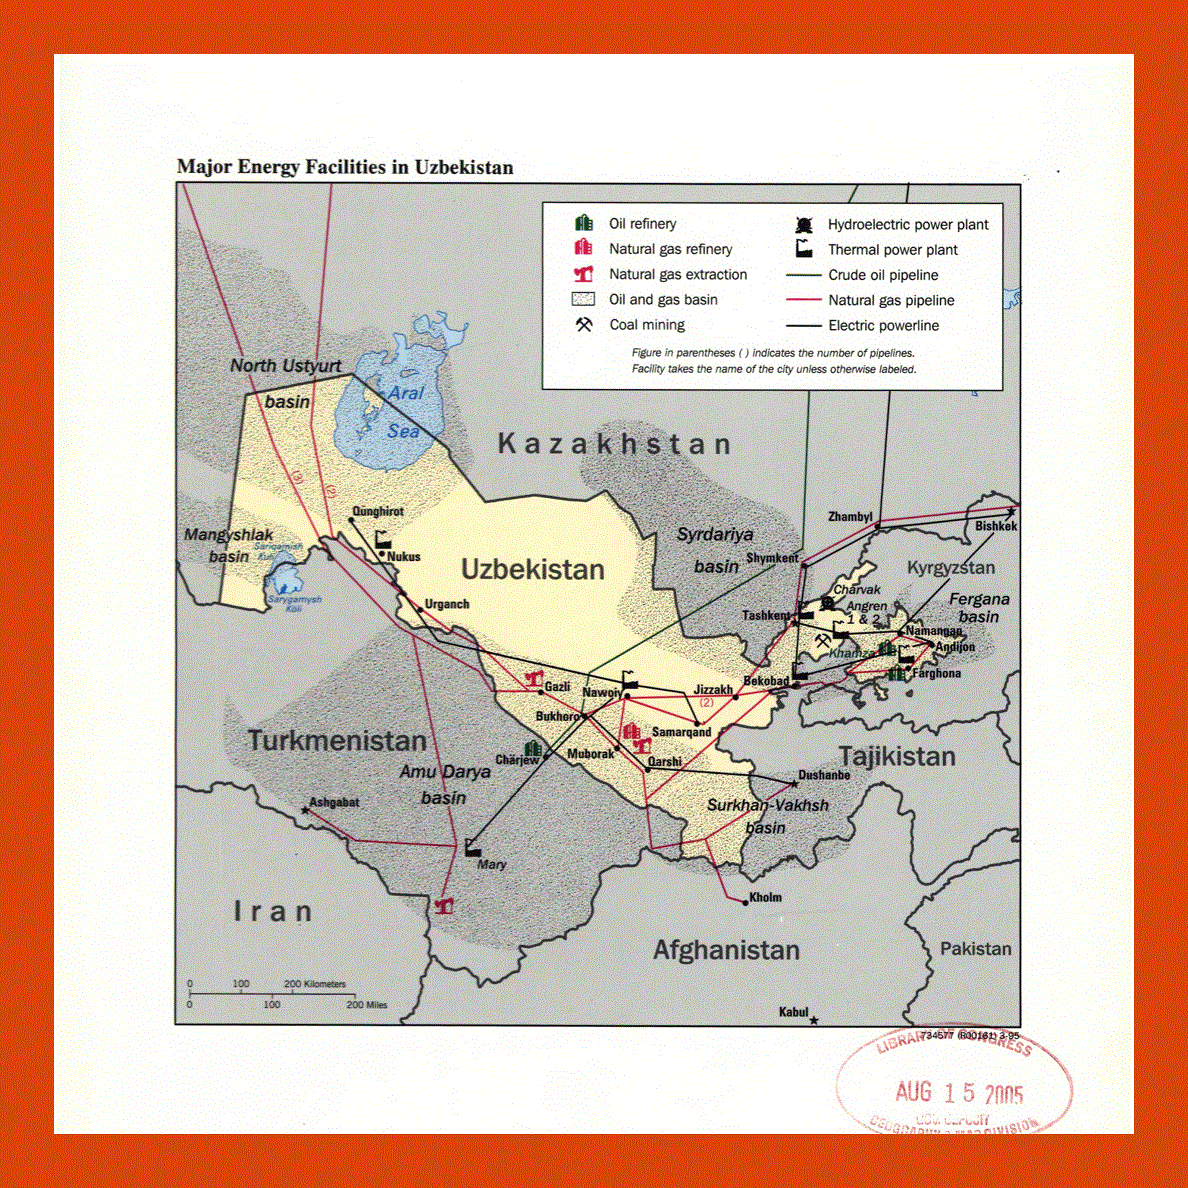 Major energy facilities map of Uzbekistan - 1995